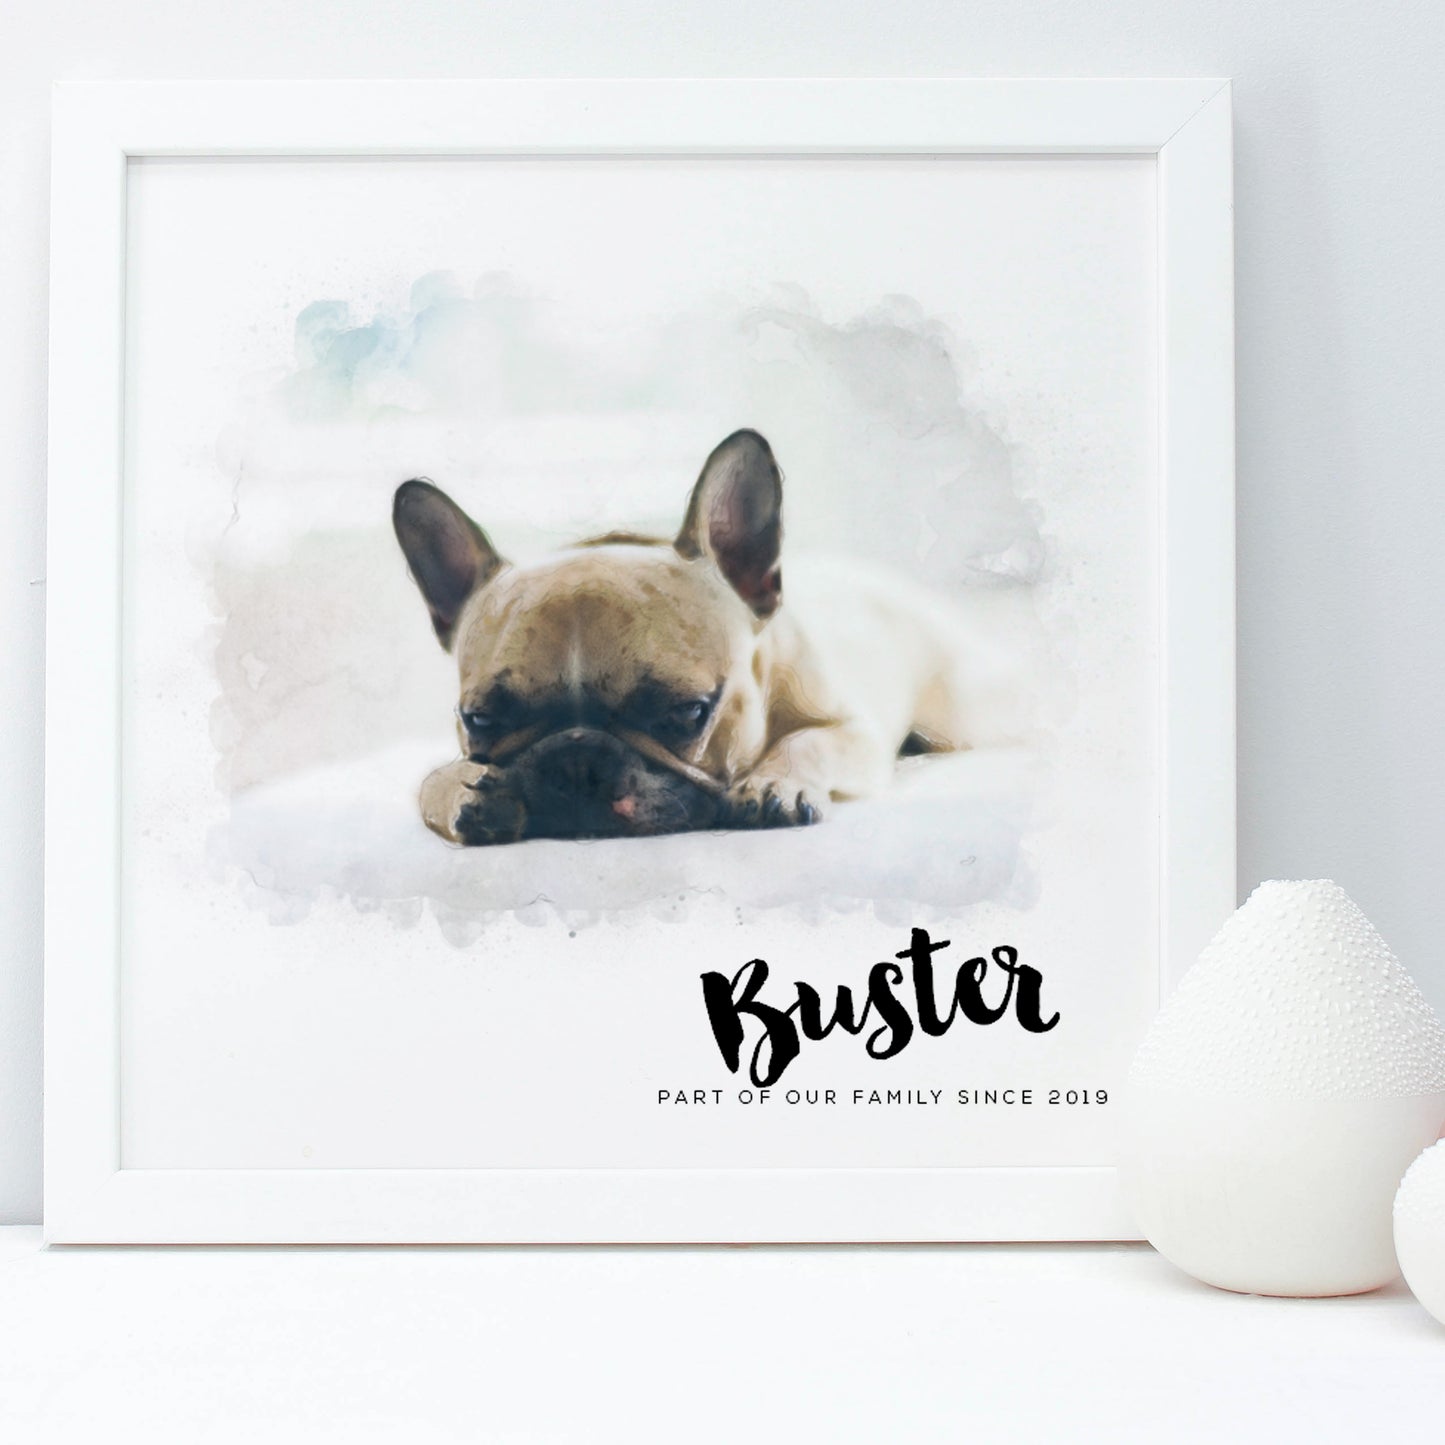 French Bulldog portrait in a white frame